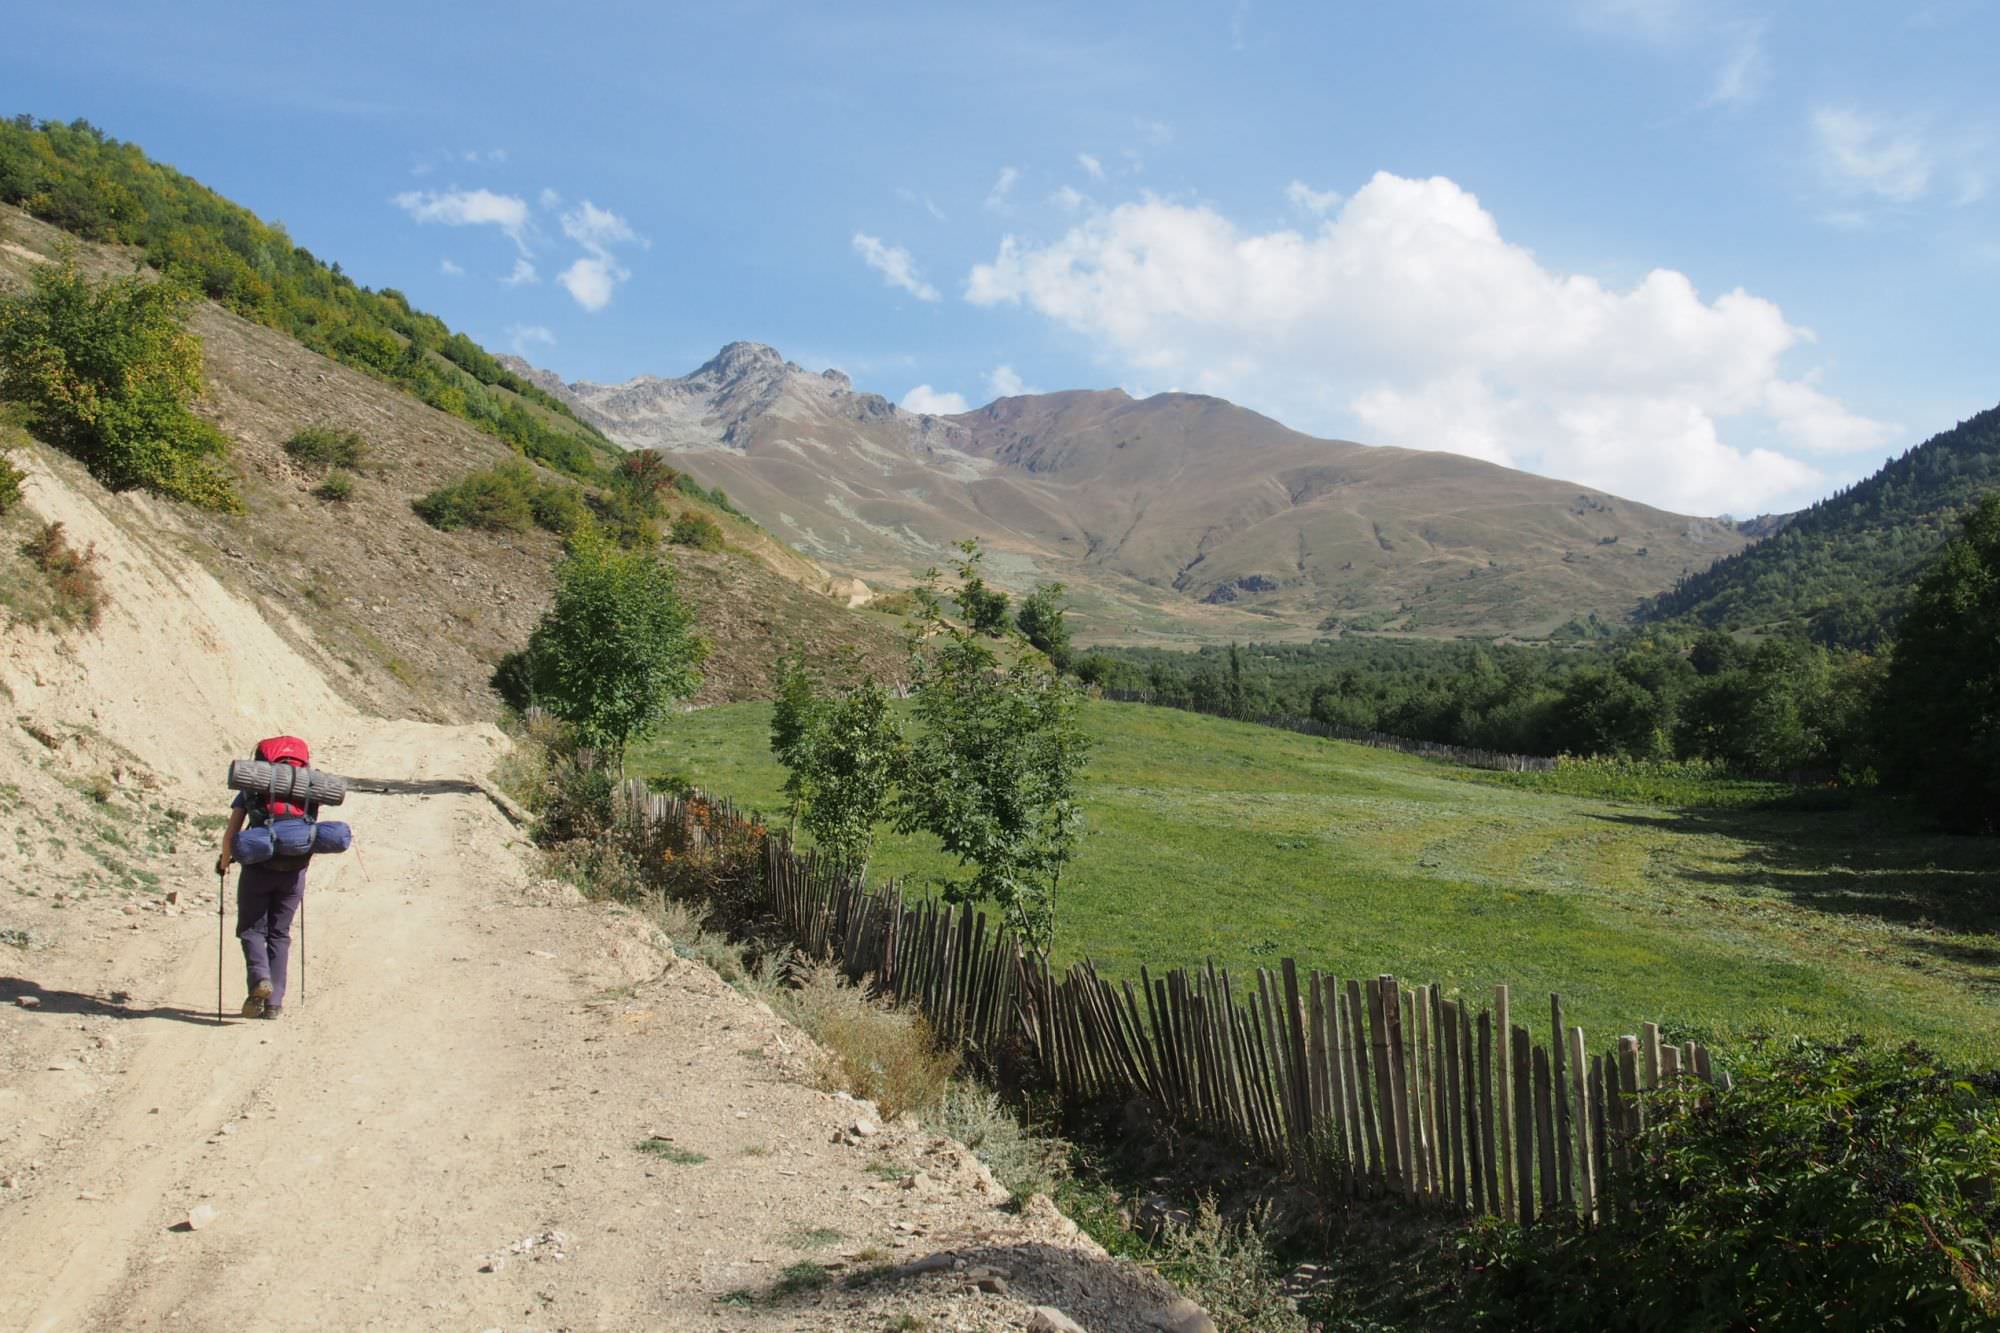 Heading up the Leshti valley